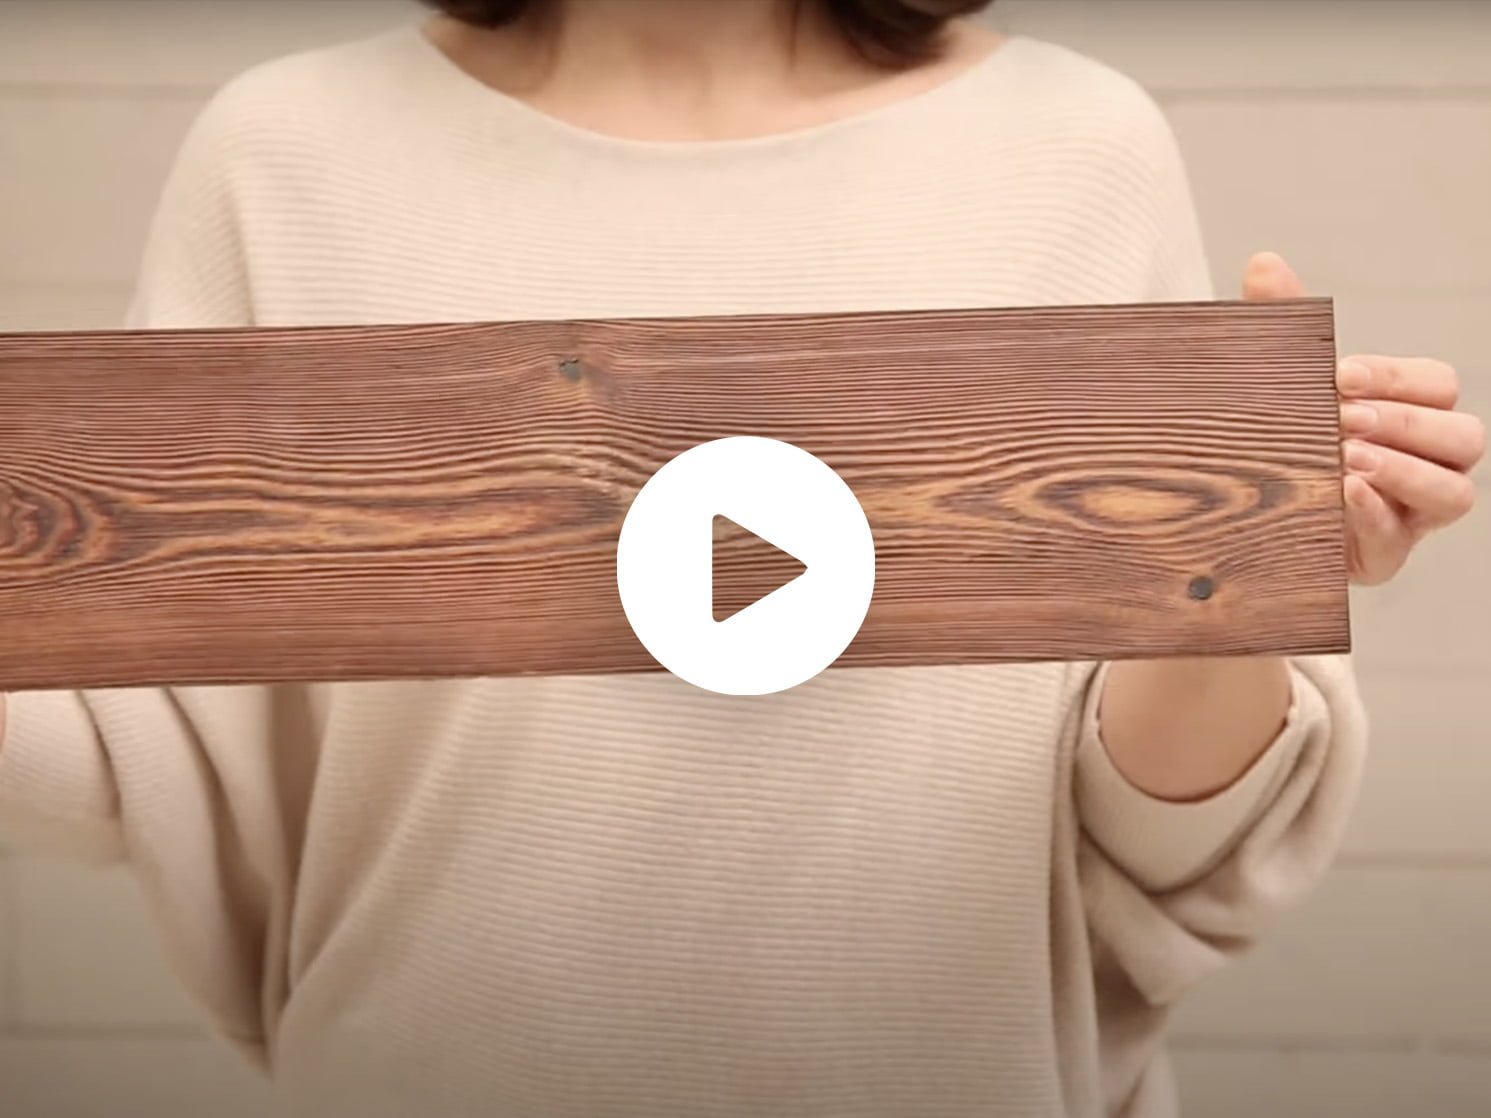 Installation - Planks Wood Buy Tool For Best J-Roller